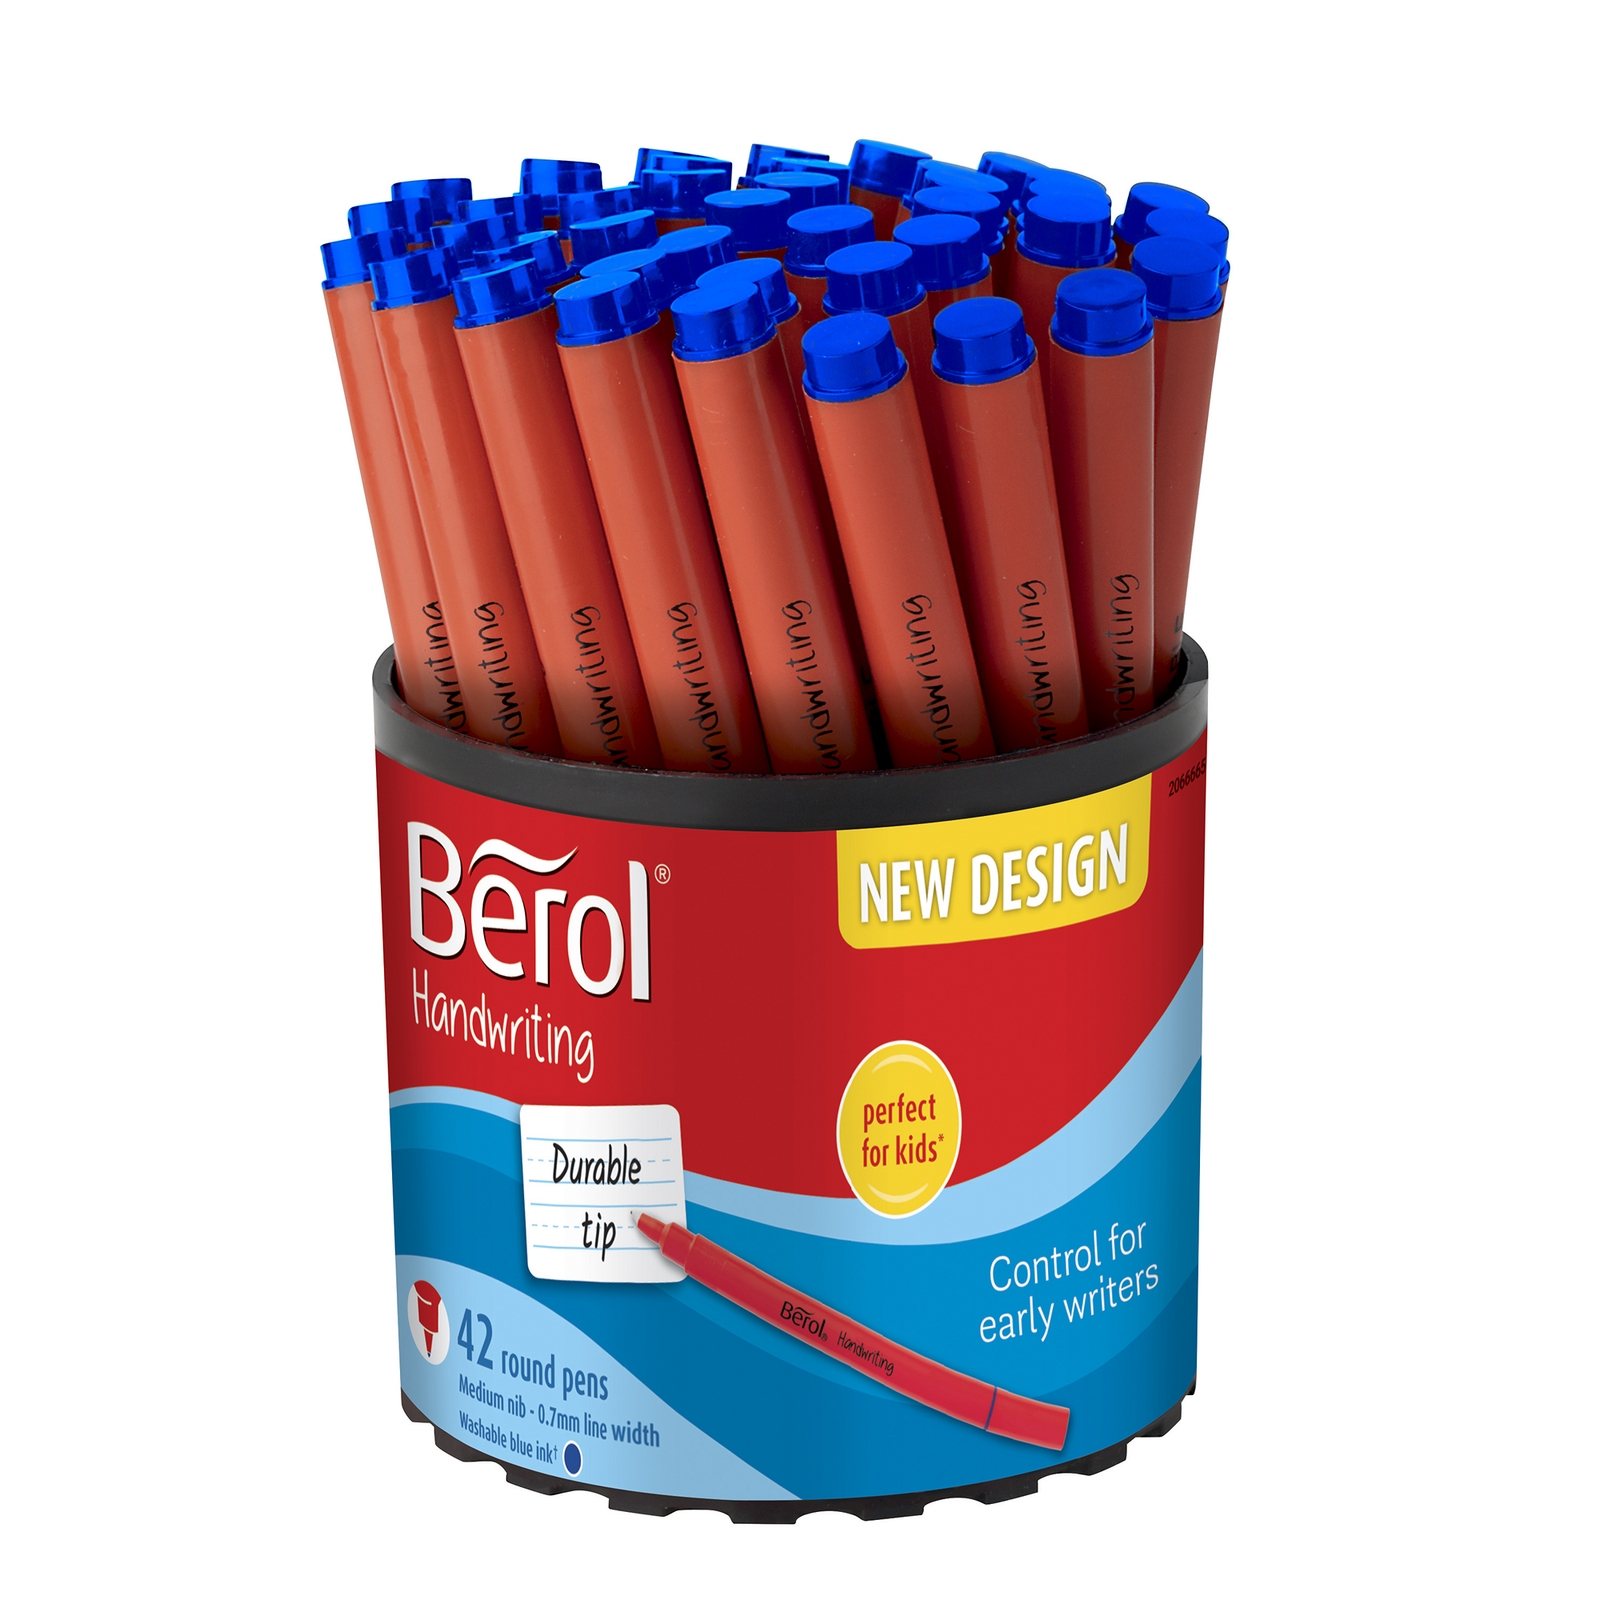 Berol Handwriting Pen - Blue, Pack of 42